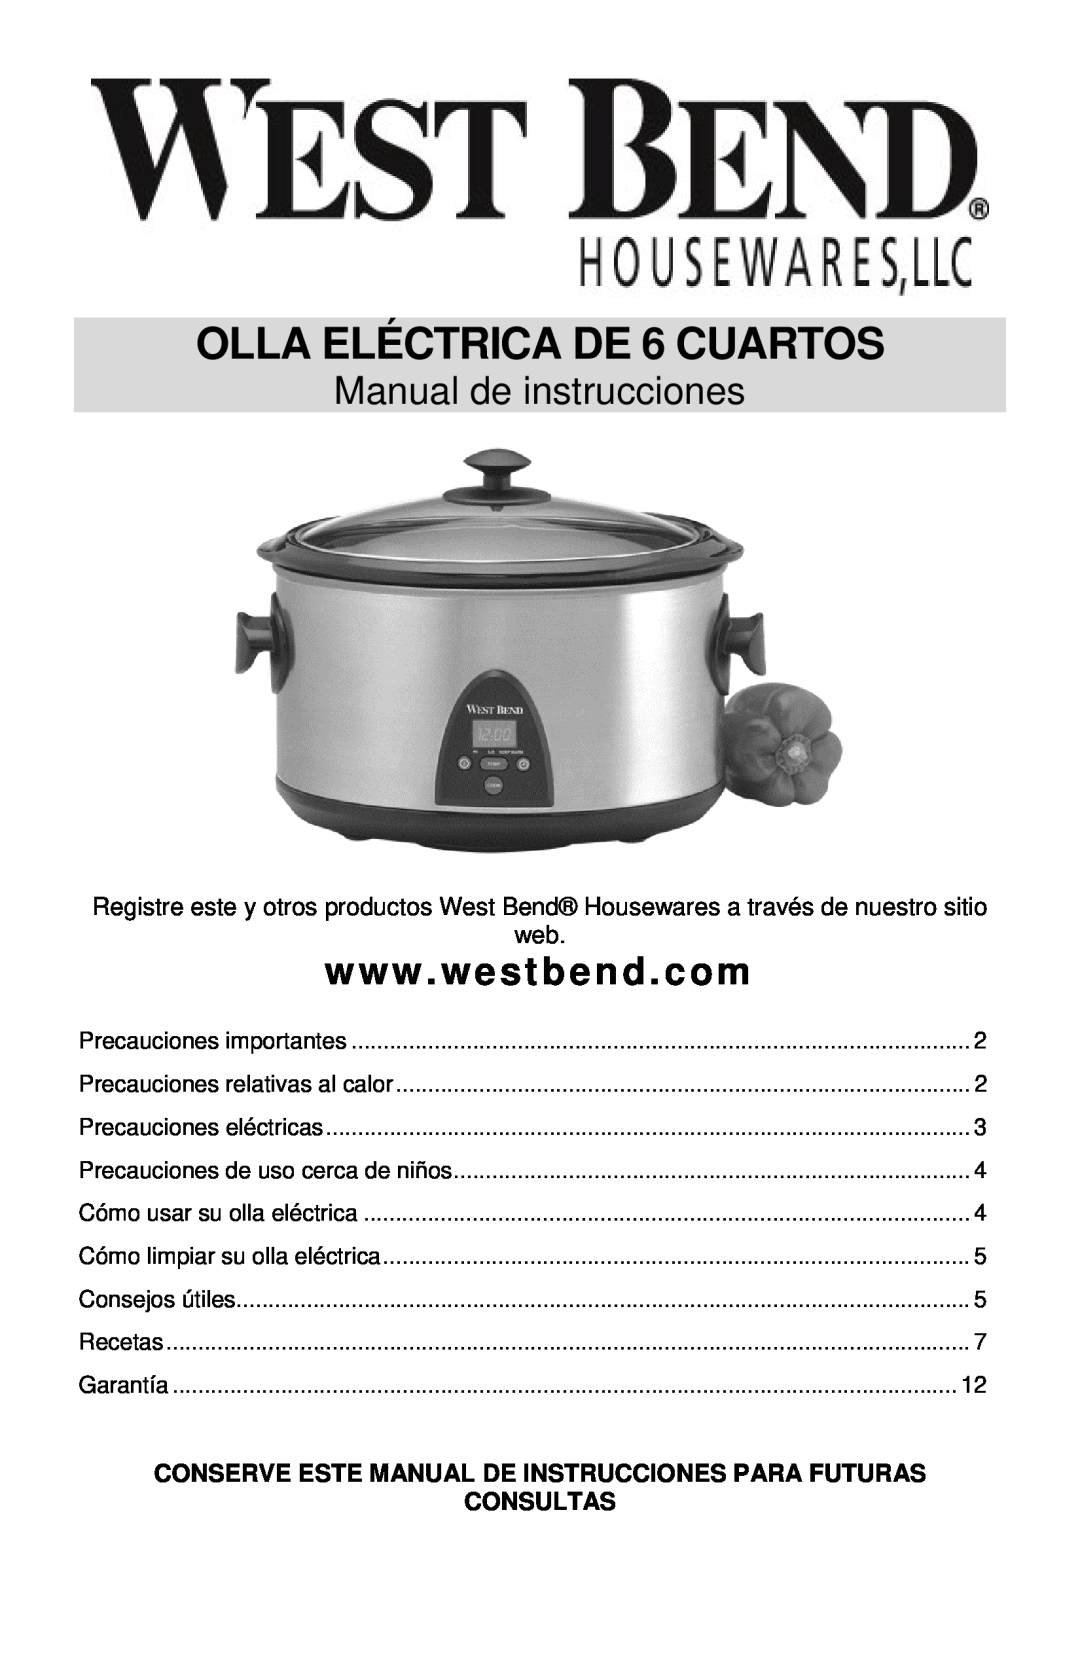 West Bend 6-QUART ELECTRONIC CROCKERYTM COOKER instruction manual OLLA ELÉCTRICA DE 6 CUARTOS, Manual de instrucciones 